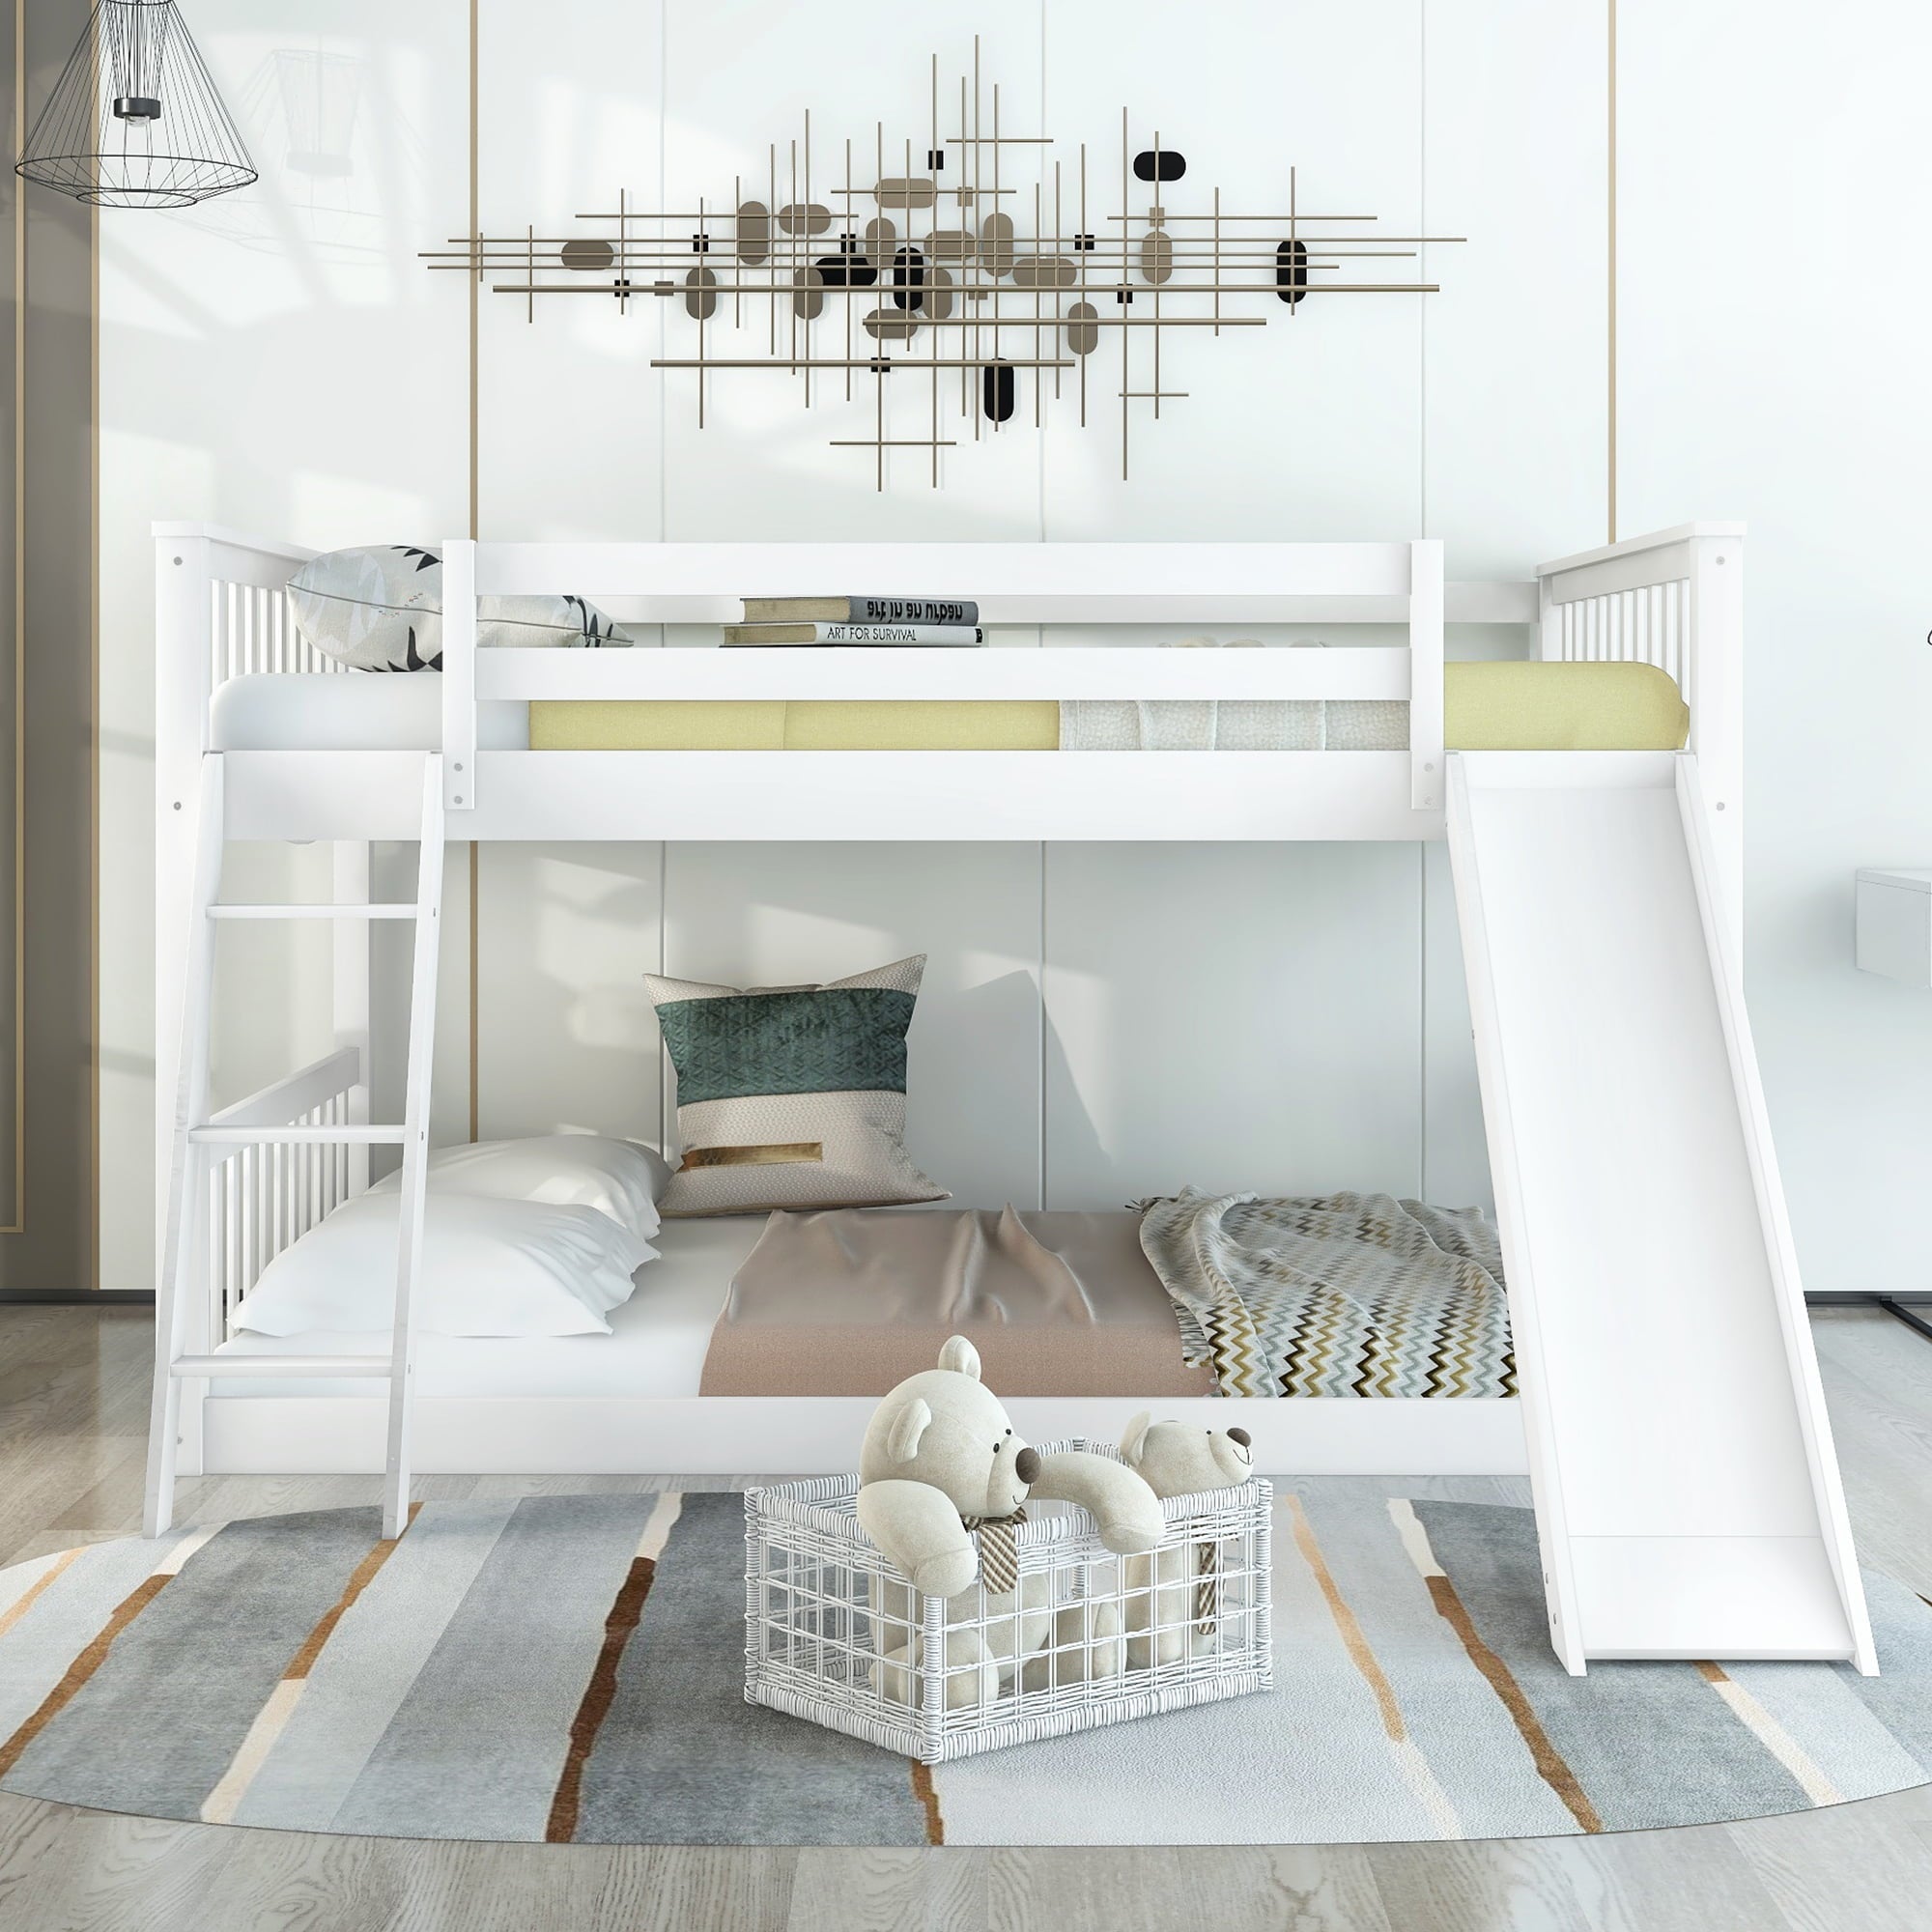 Euroco Full over Full Floor Bunk Bed with Slide and Ladder for Kids Bedroom, White